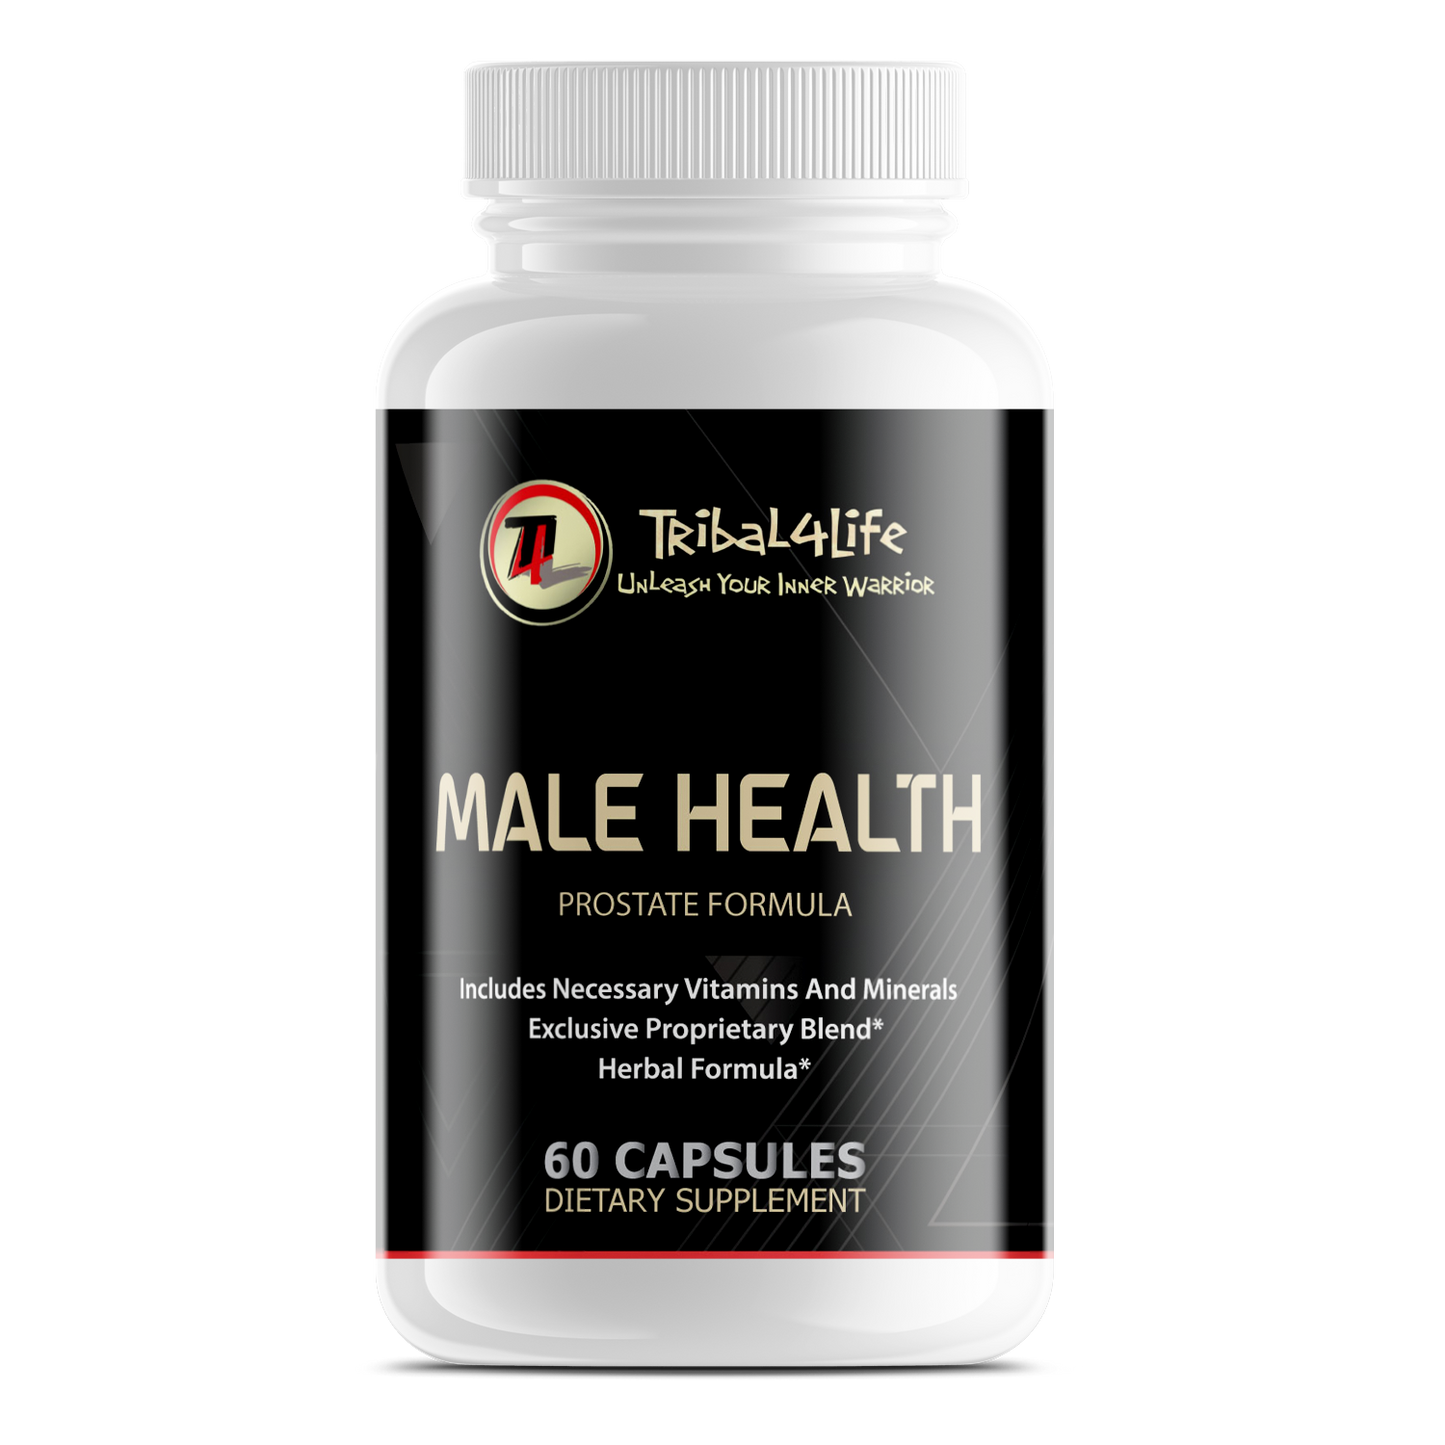 MALE HEALTH - Prostate Formula